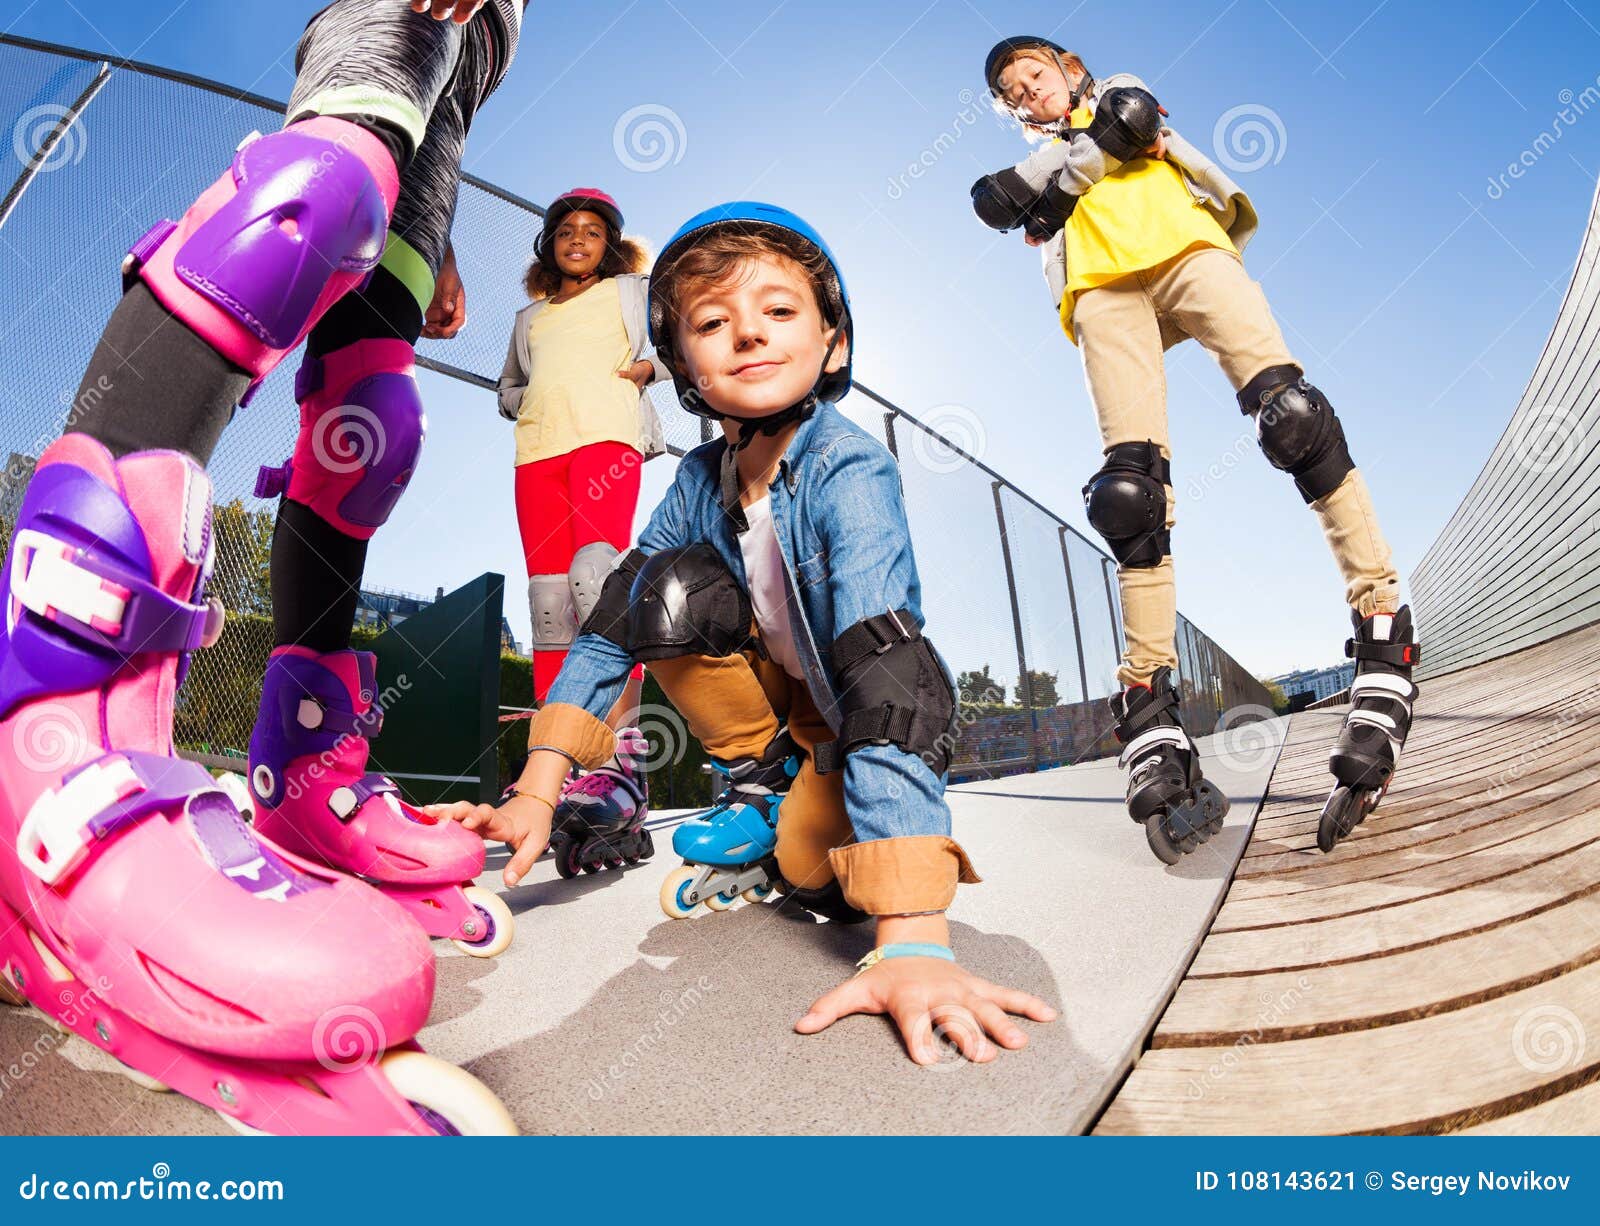 cute boy in roller skates having fun with friends